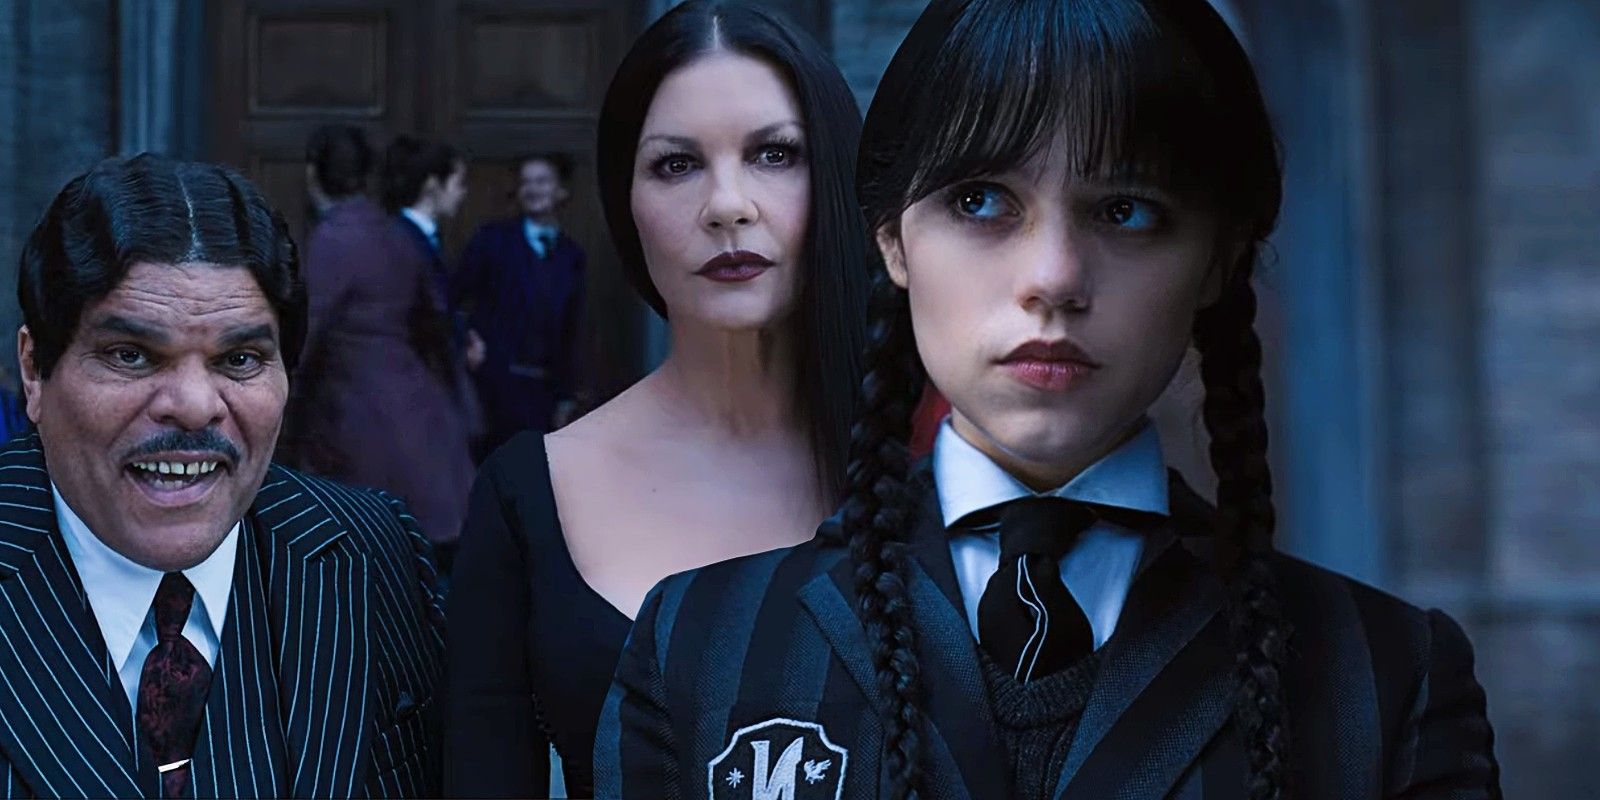 Luis Guzmán as Gomez Addams and Catherine Zeta-Jones as Morticia Addams Jenna Ortega as Wednesday Addams in Wednesday episode 4